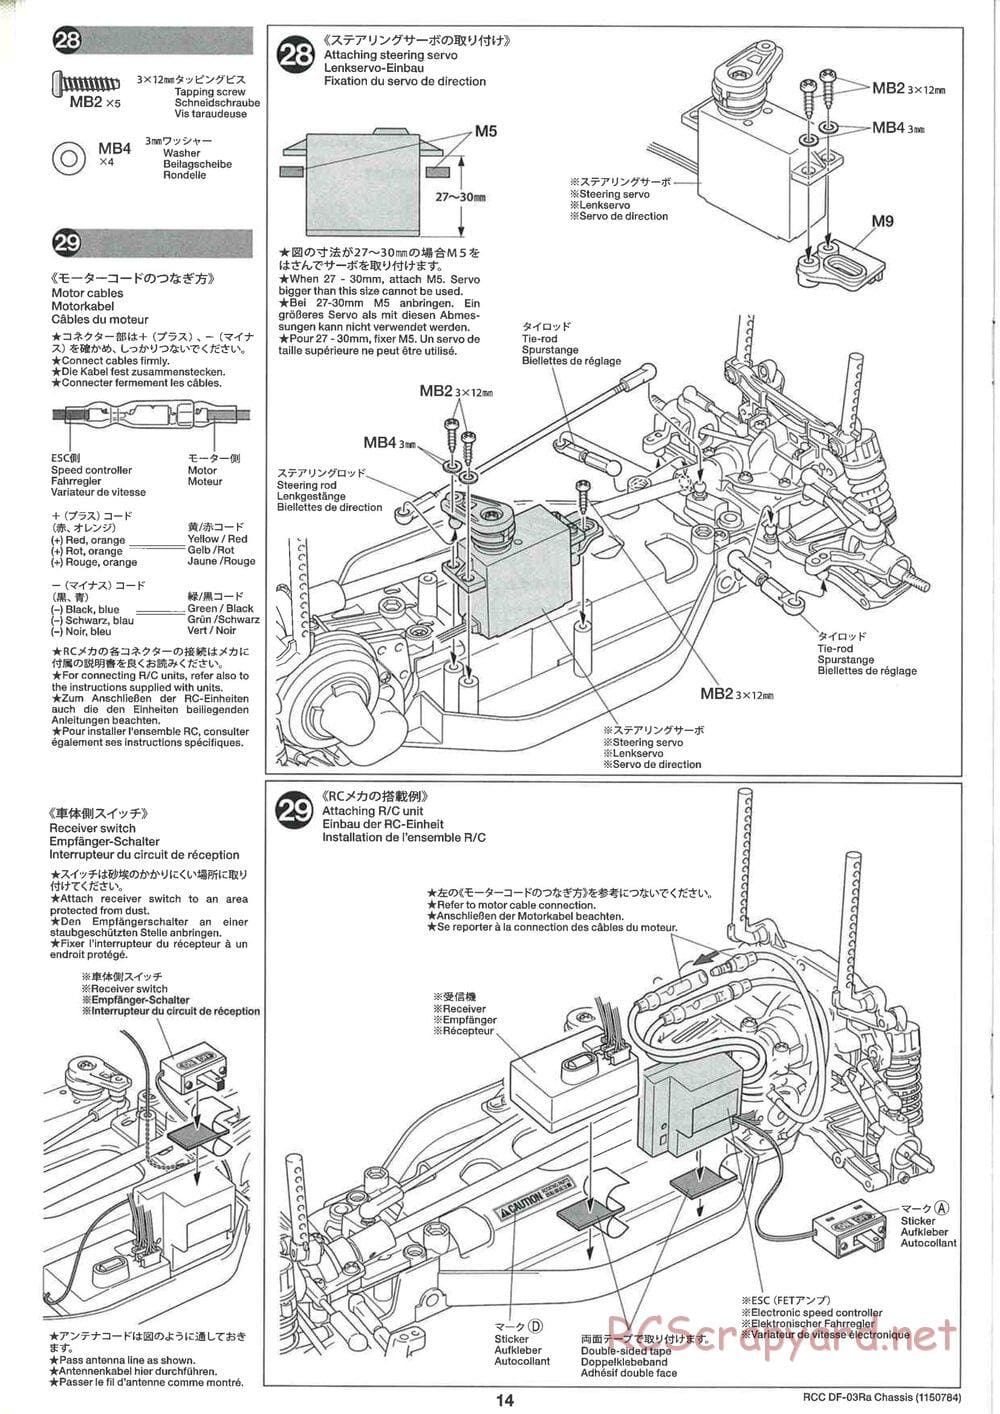 Tamiya - DF-03Ra Chassis - Manual - Page 14